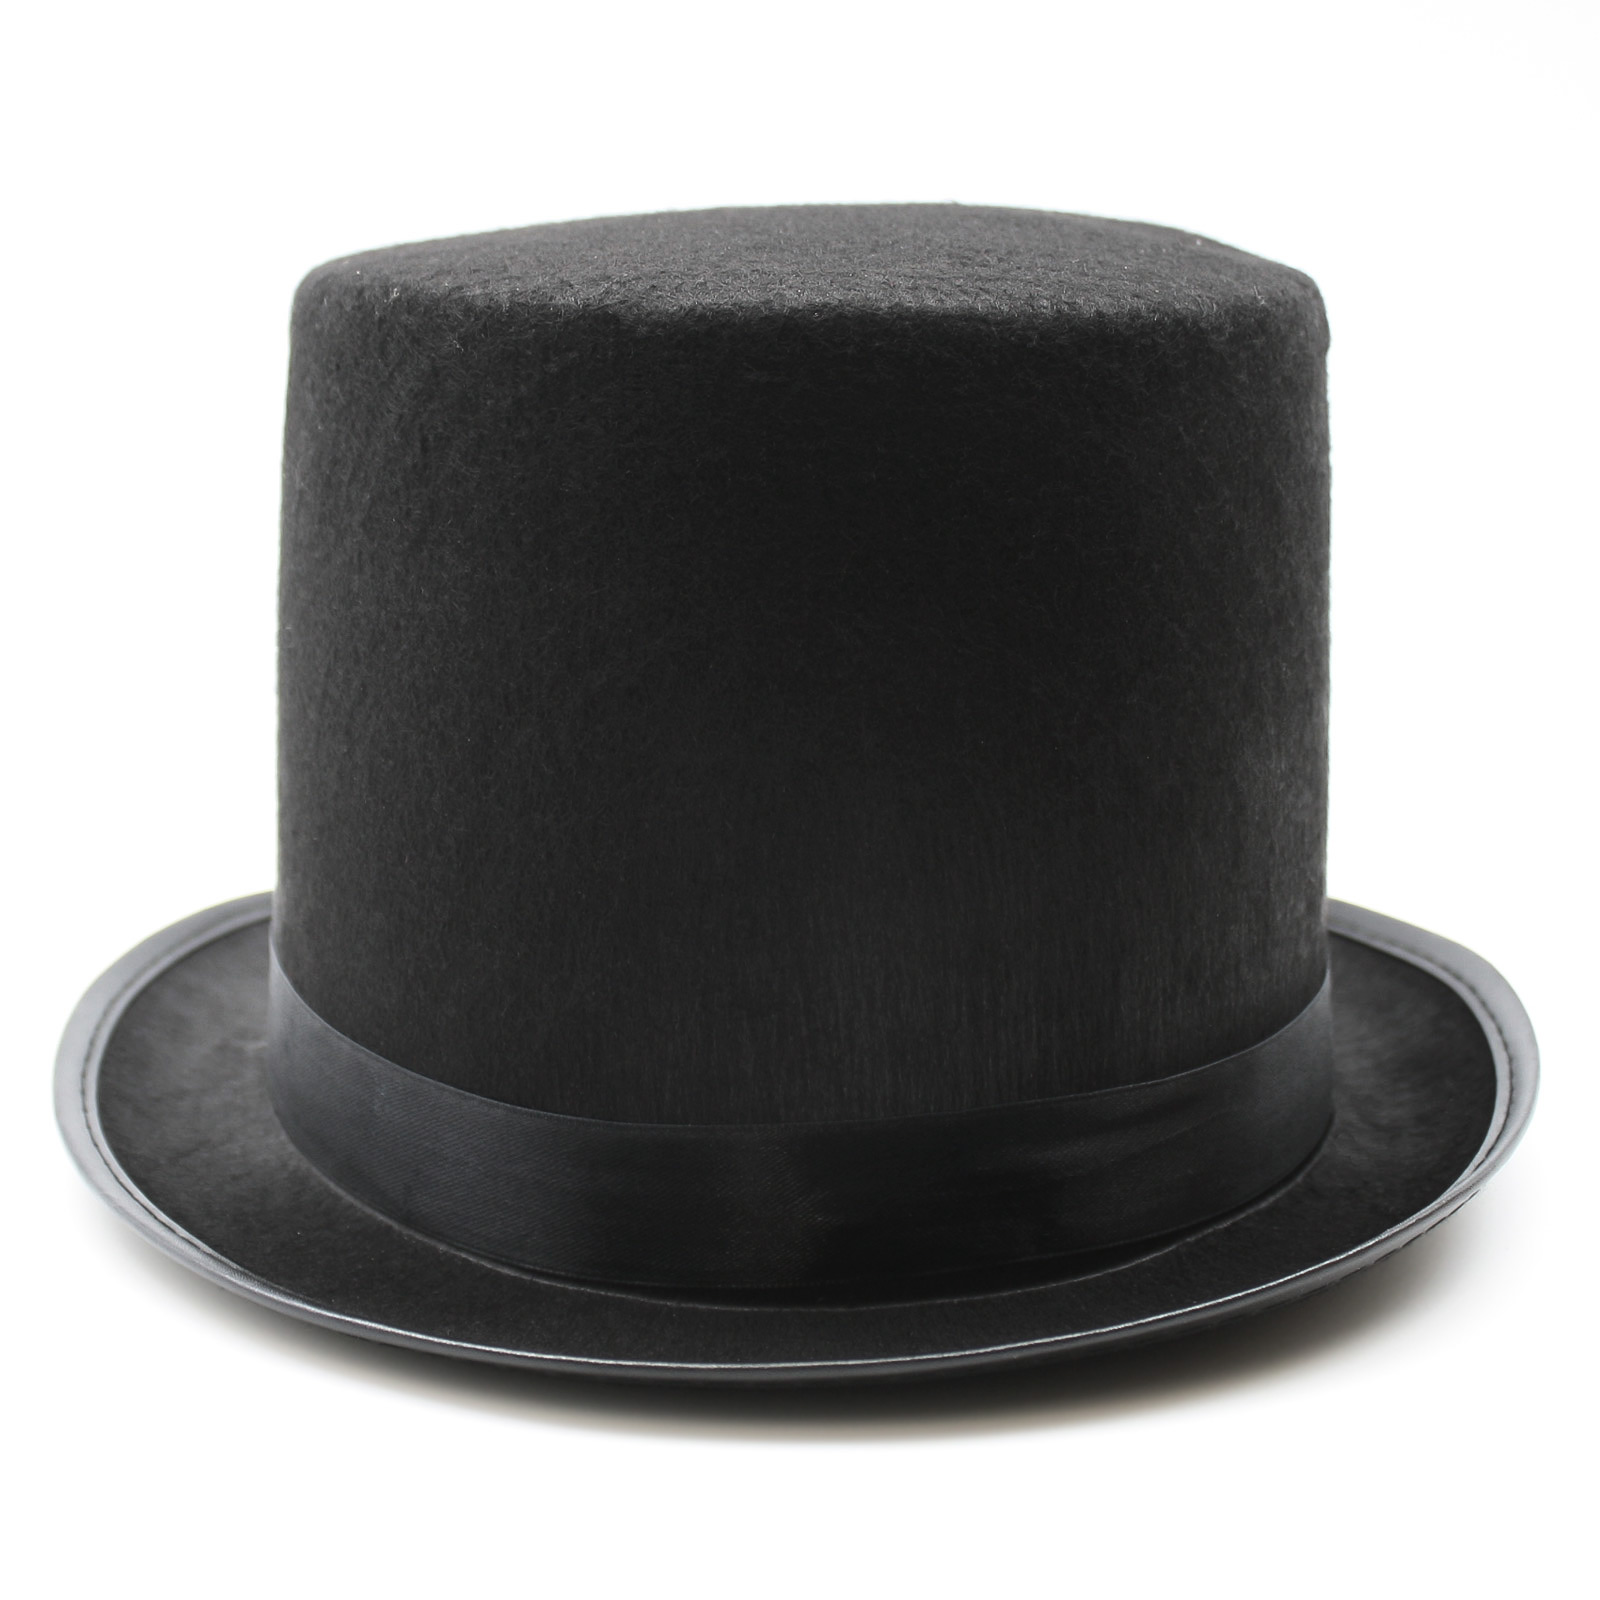 XL Super BIG HEAD SteamPUNK Victorian Slash Costume Top Hat Black | eBay